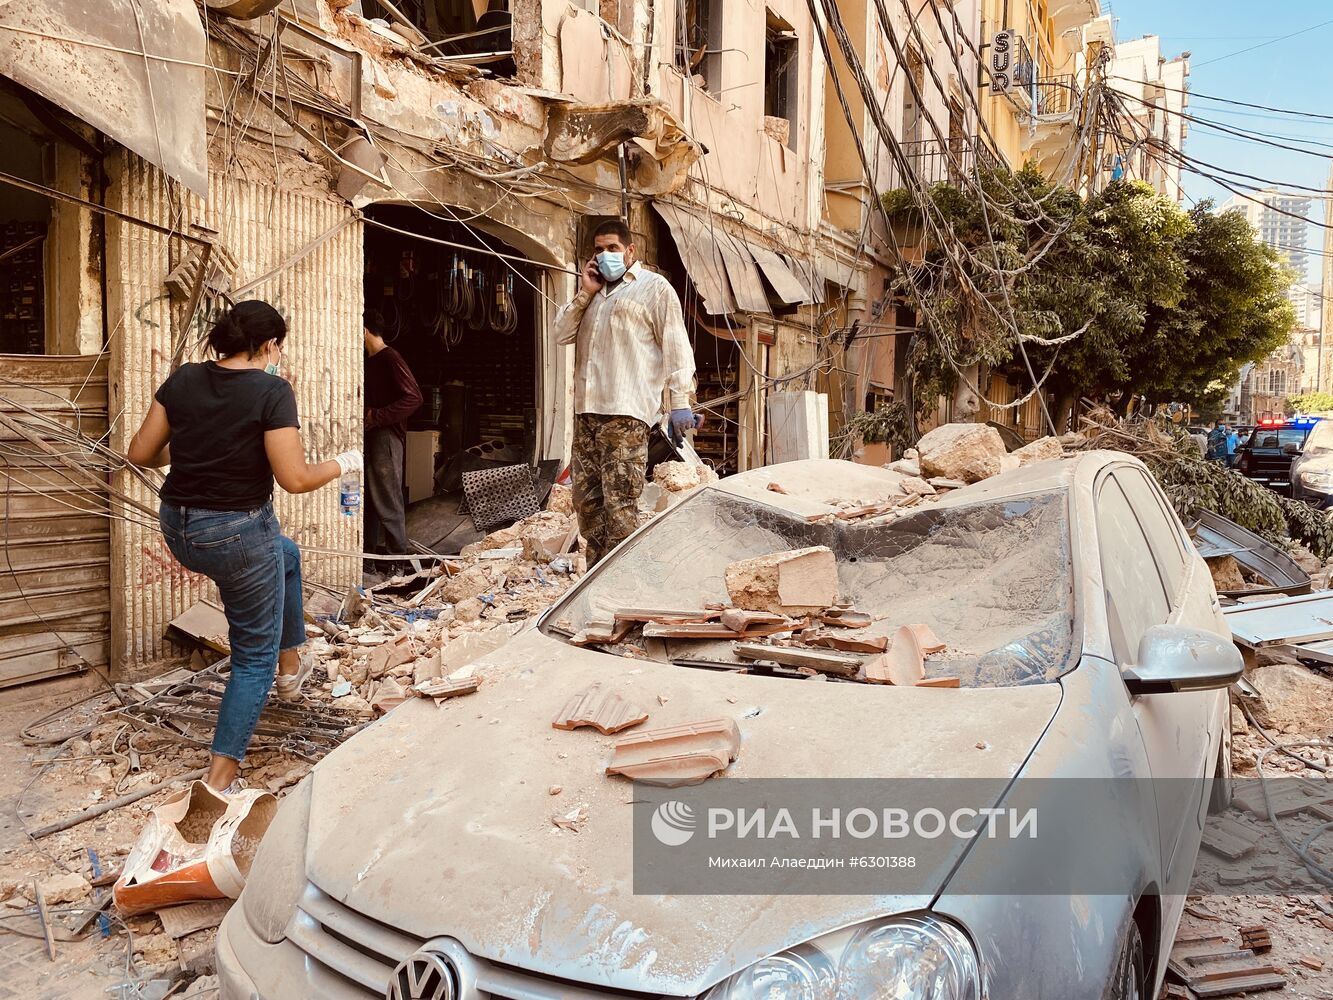 Последствия взрыва в Ливане